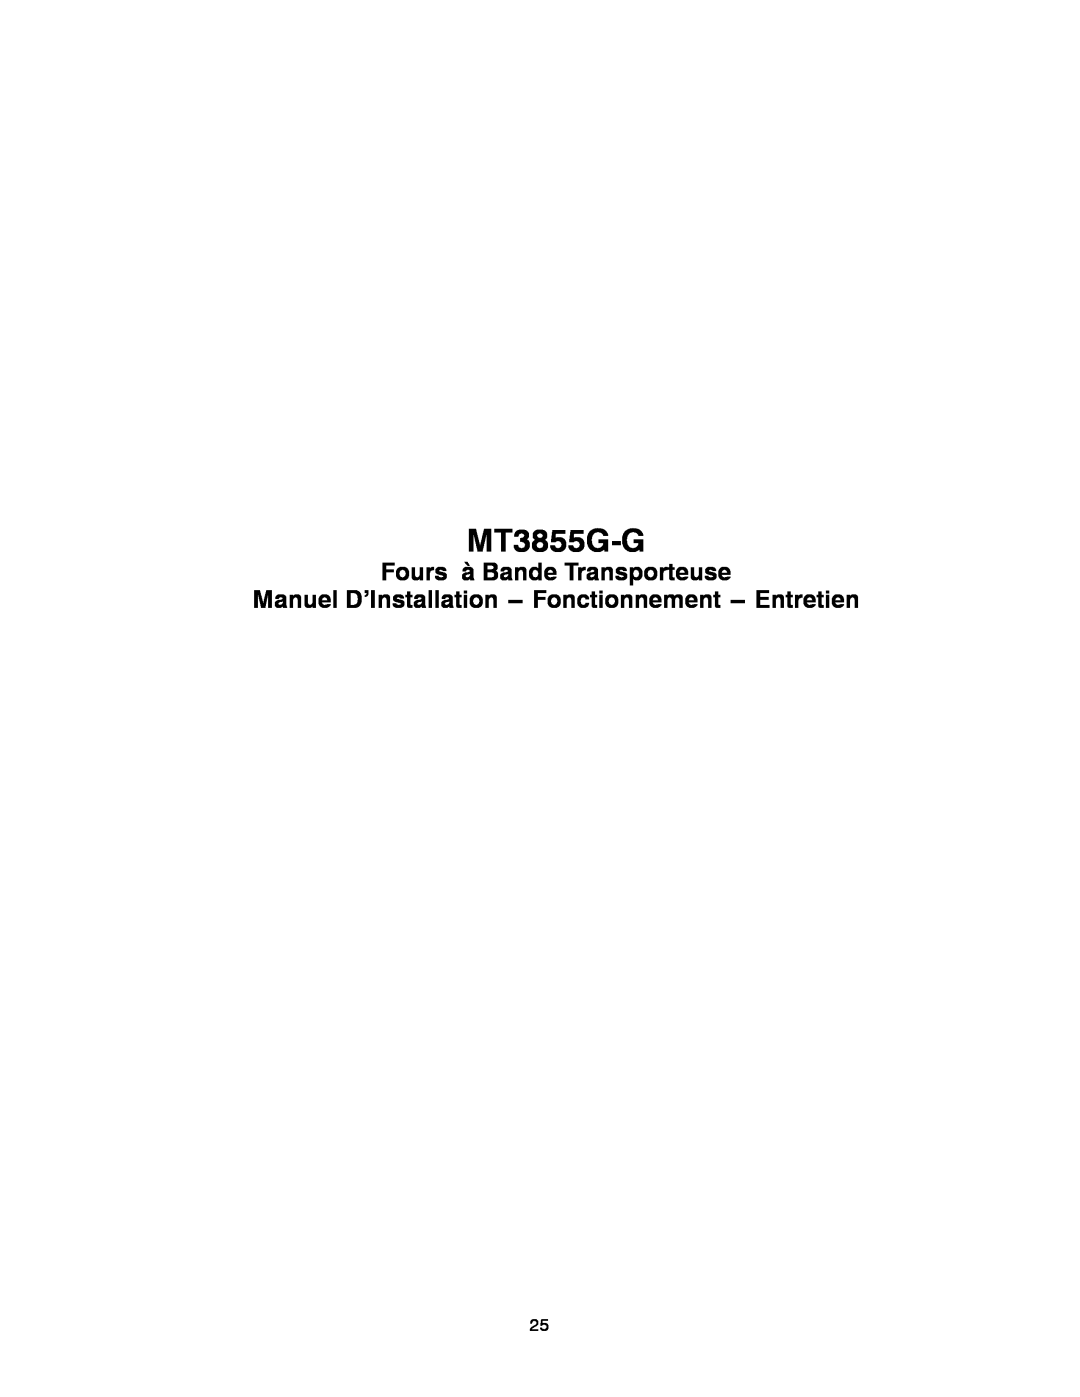 Blodgett MT3855G-G manual Fours à Bande Transporteuse, Manuel D’Installation --- Fonctionnement --- Entretien 